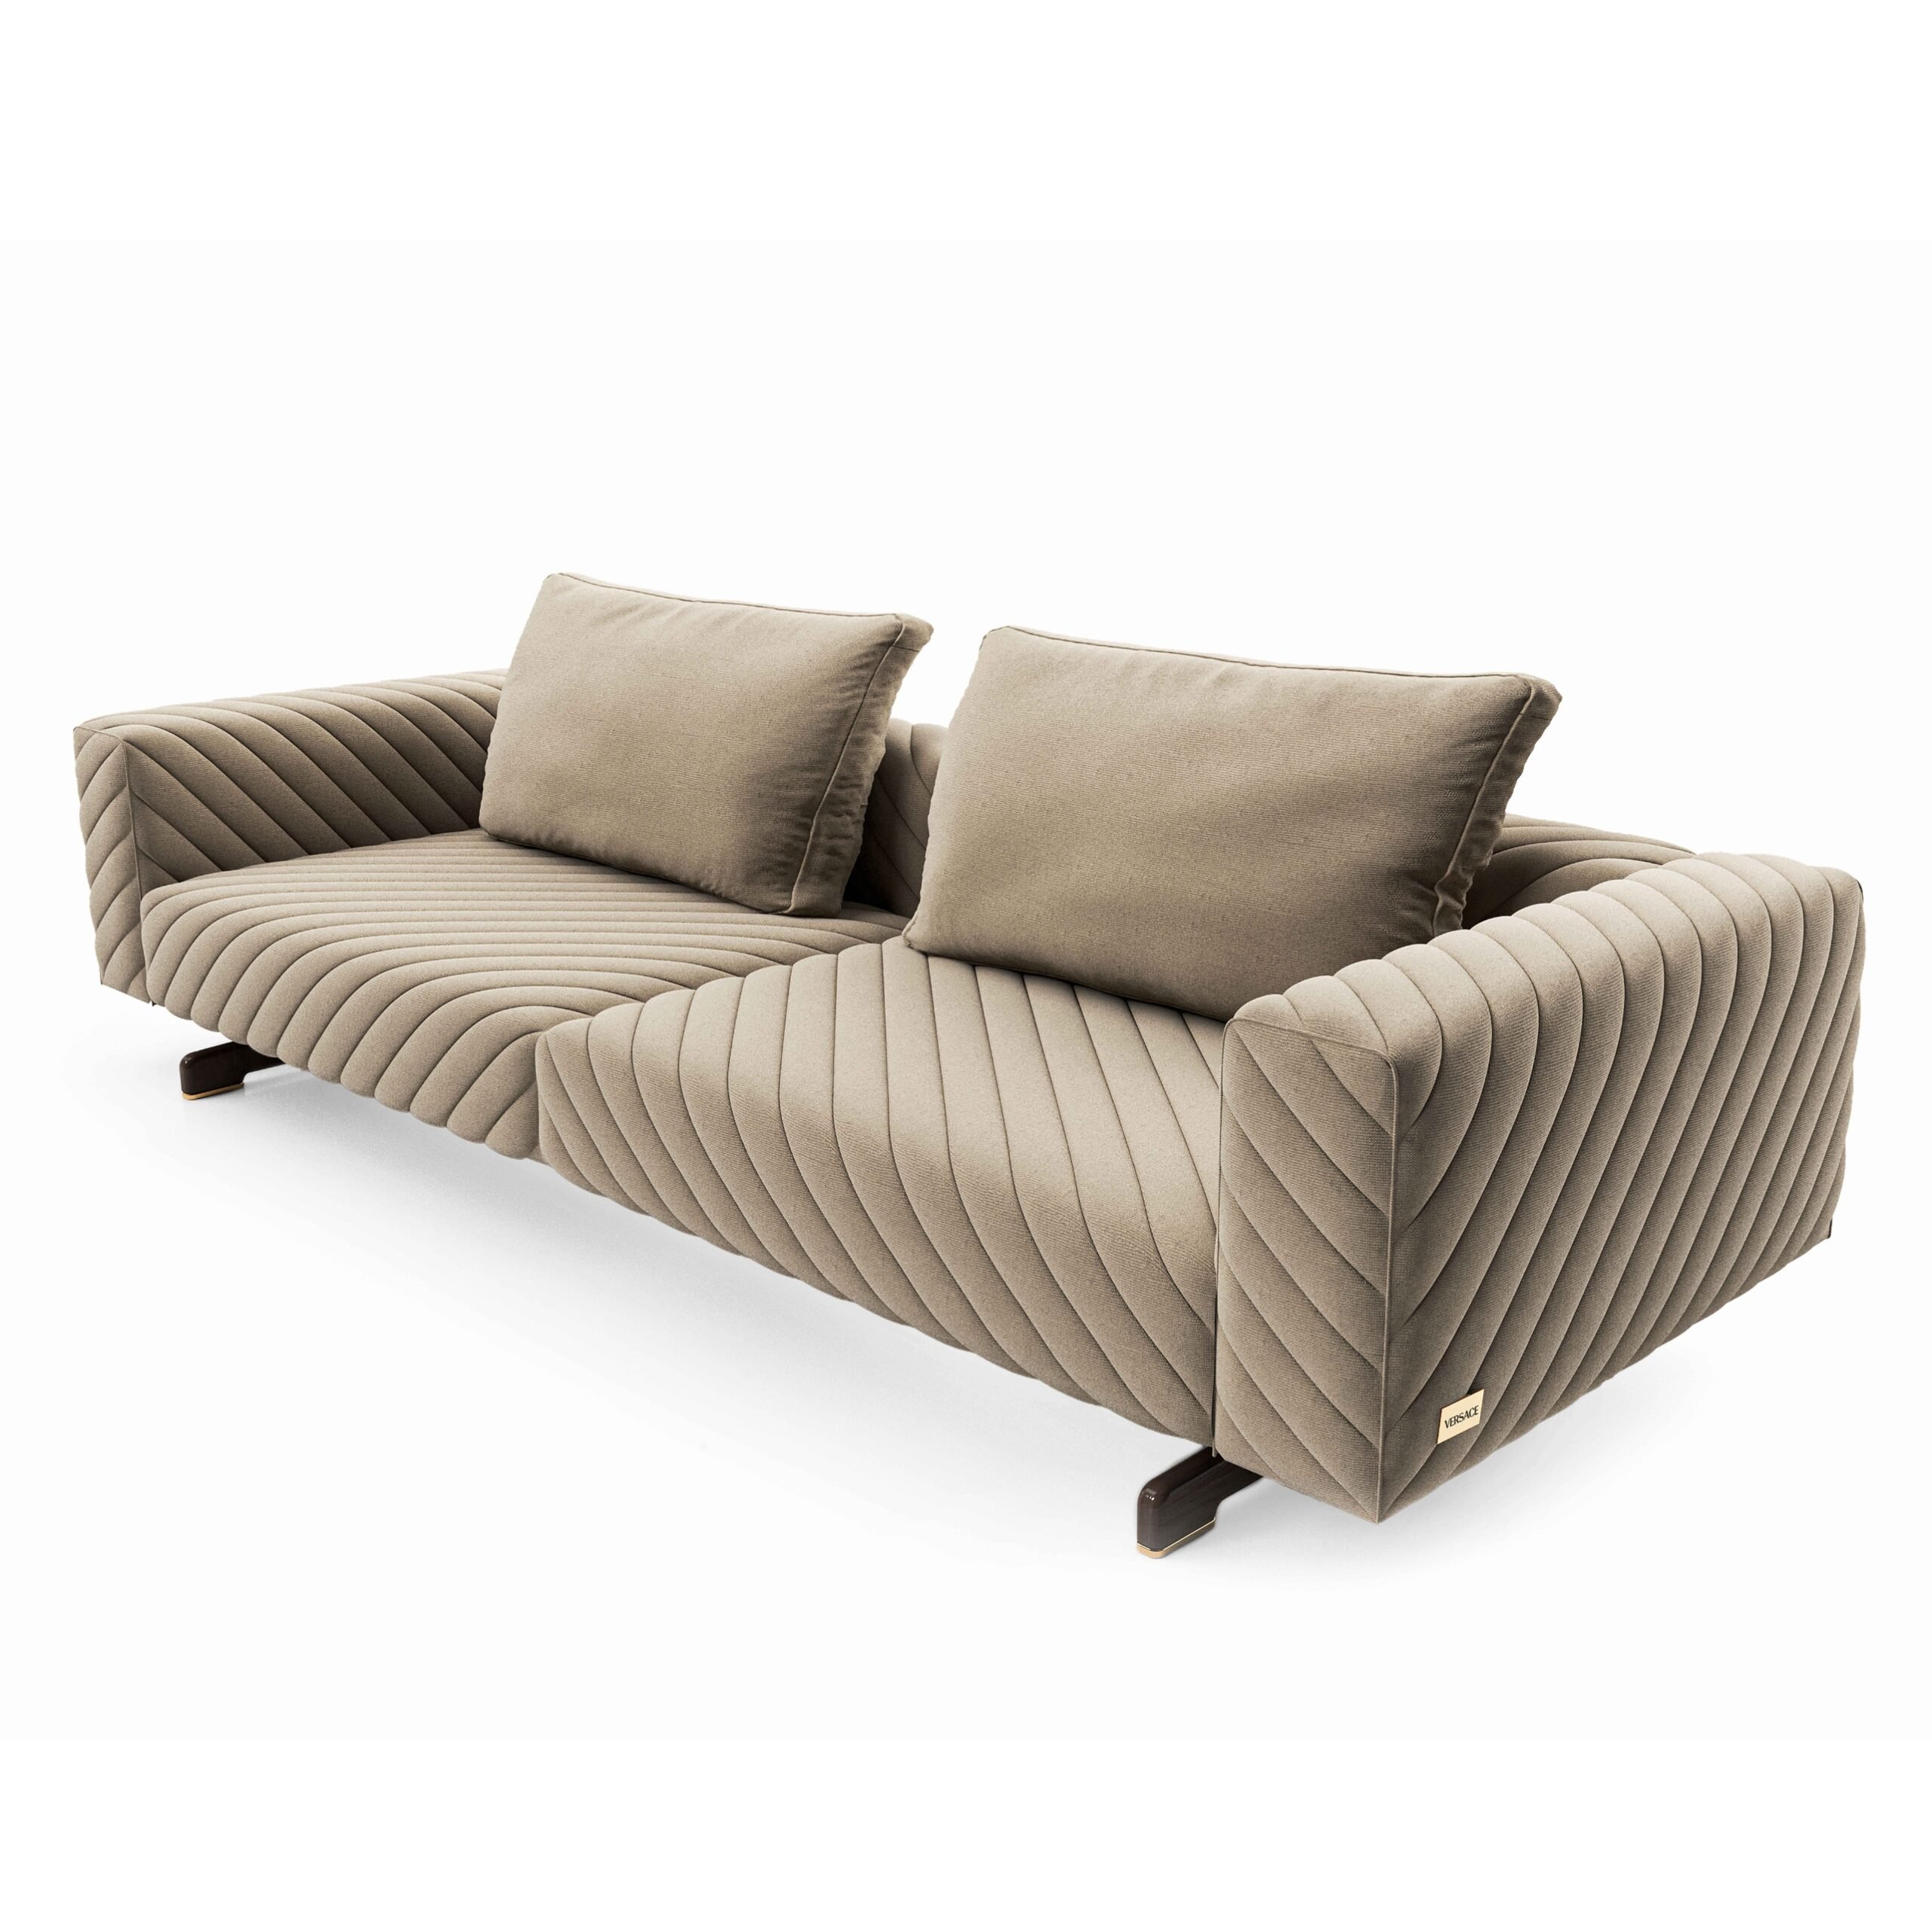 Versace Home Discovery sofa